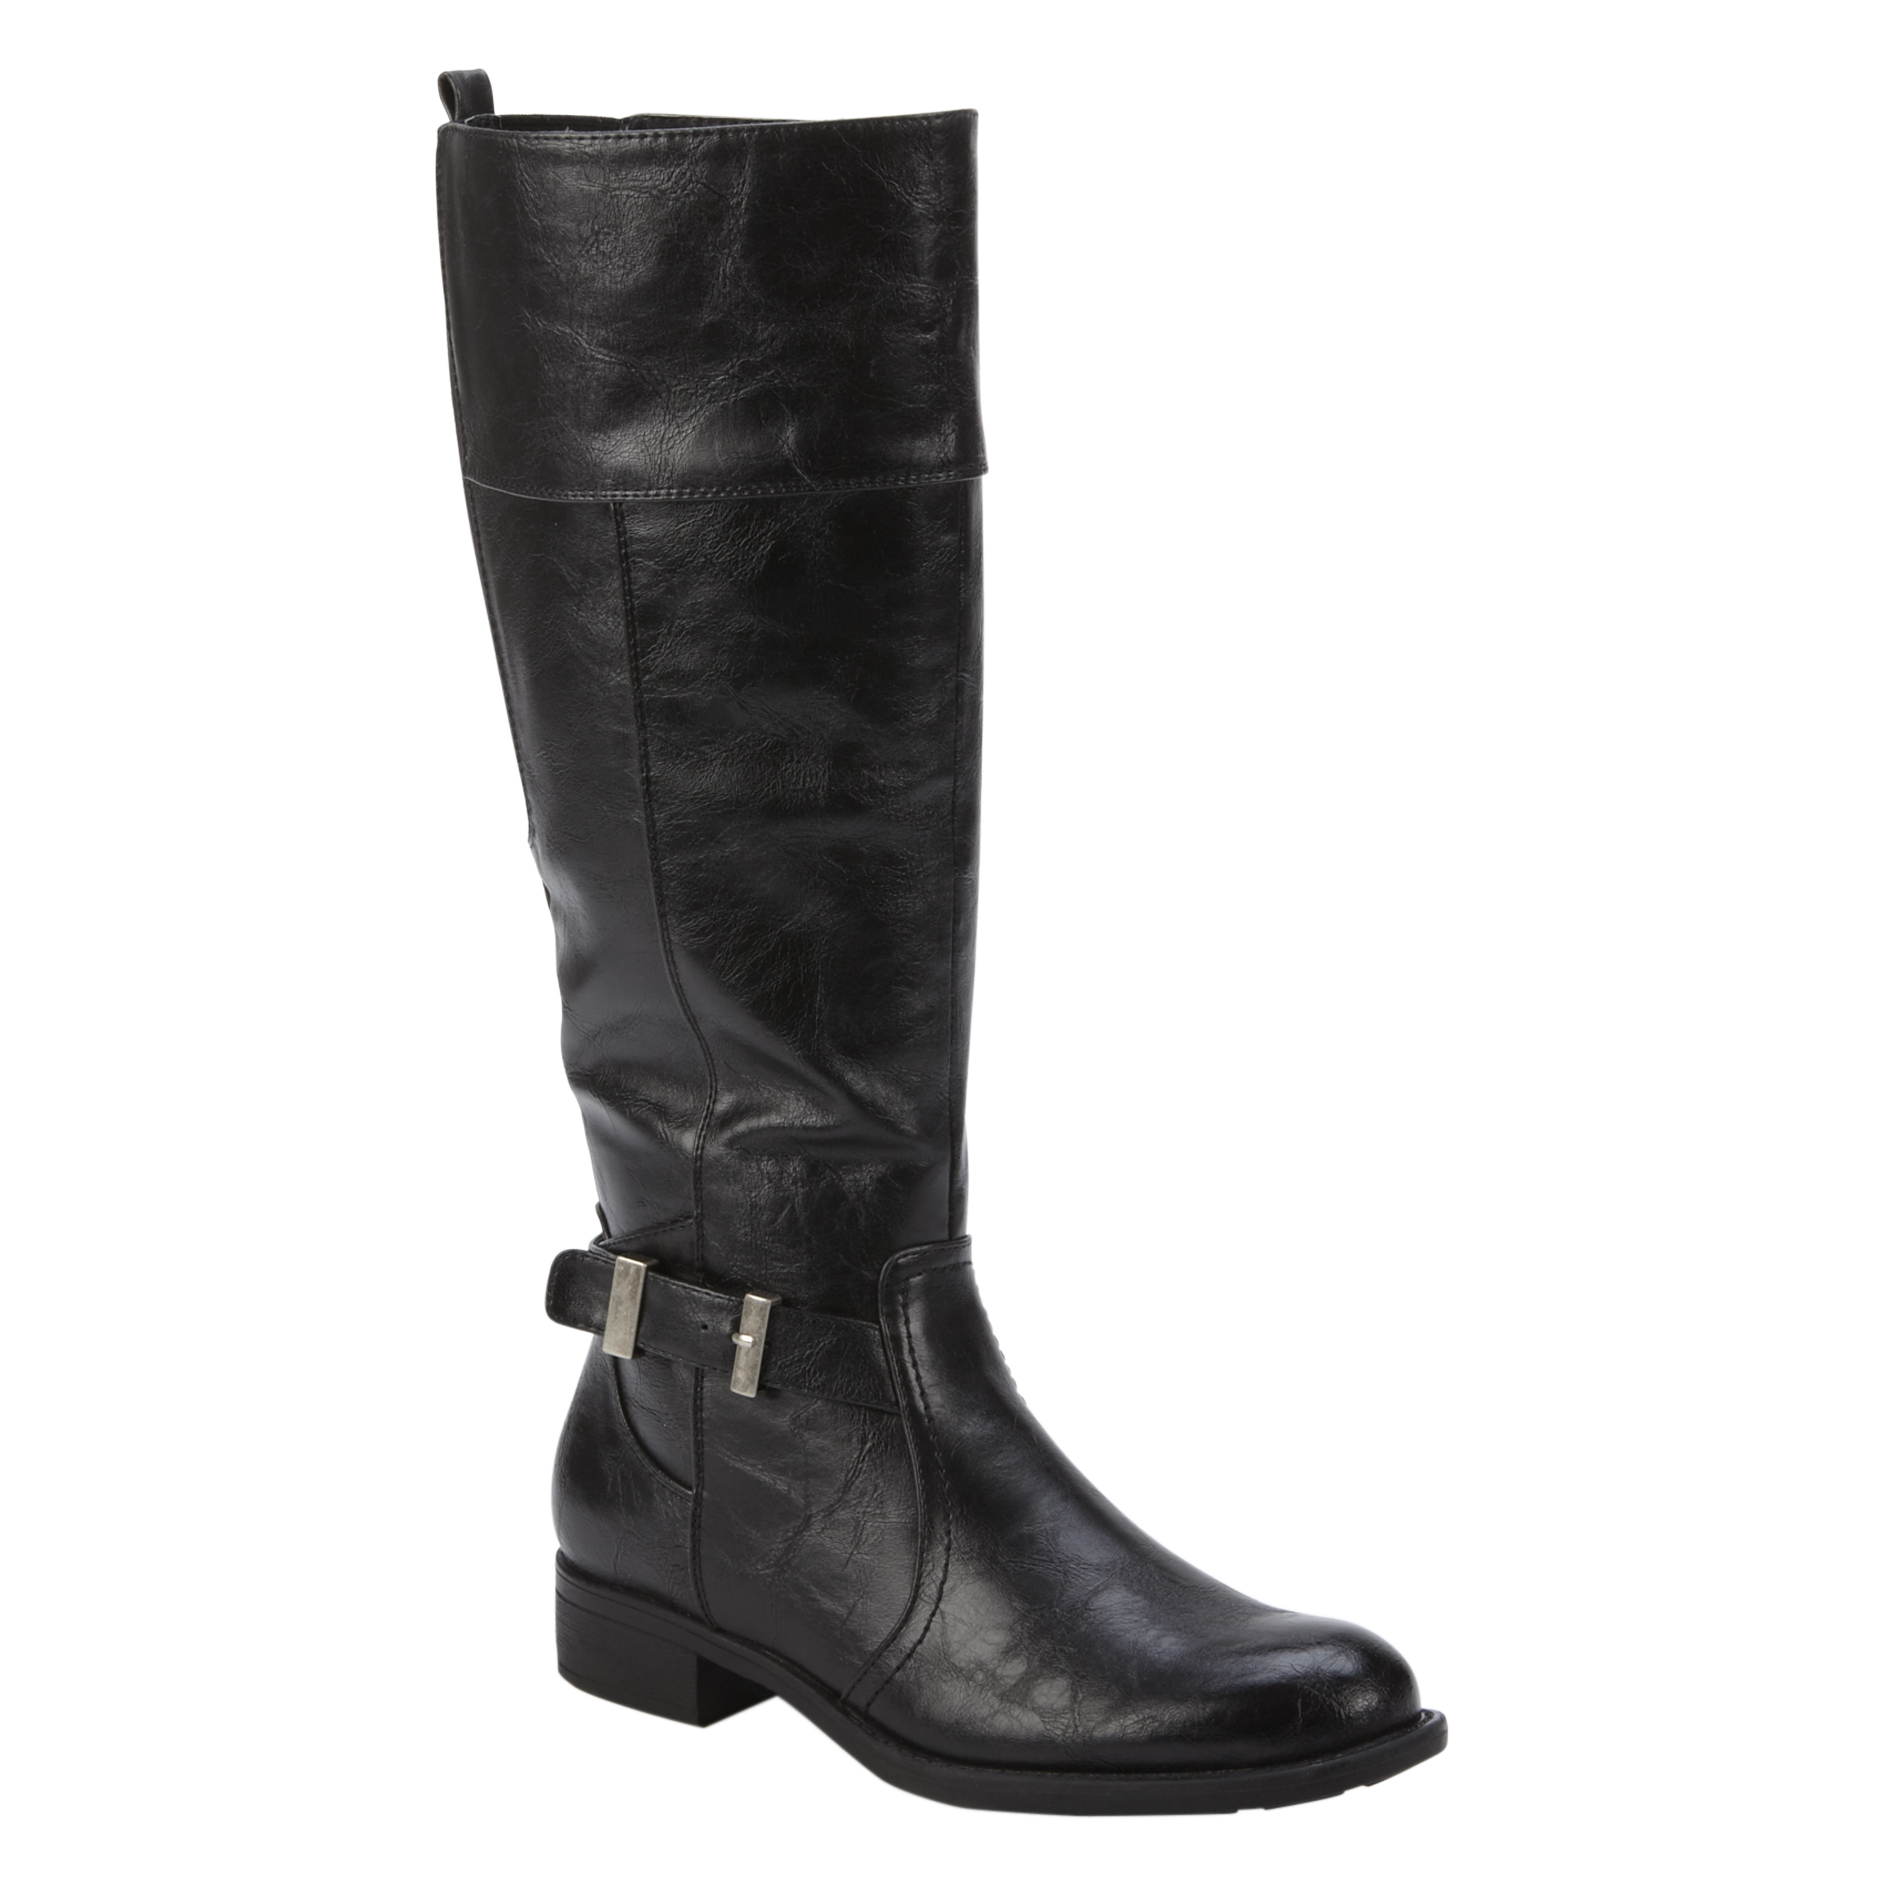 Wear Ever Women's Riding Boot Savannah Extended Calf - Black